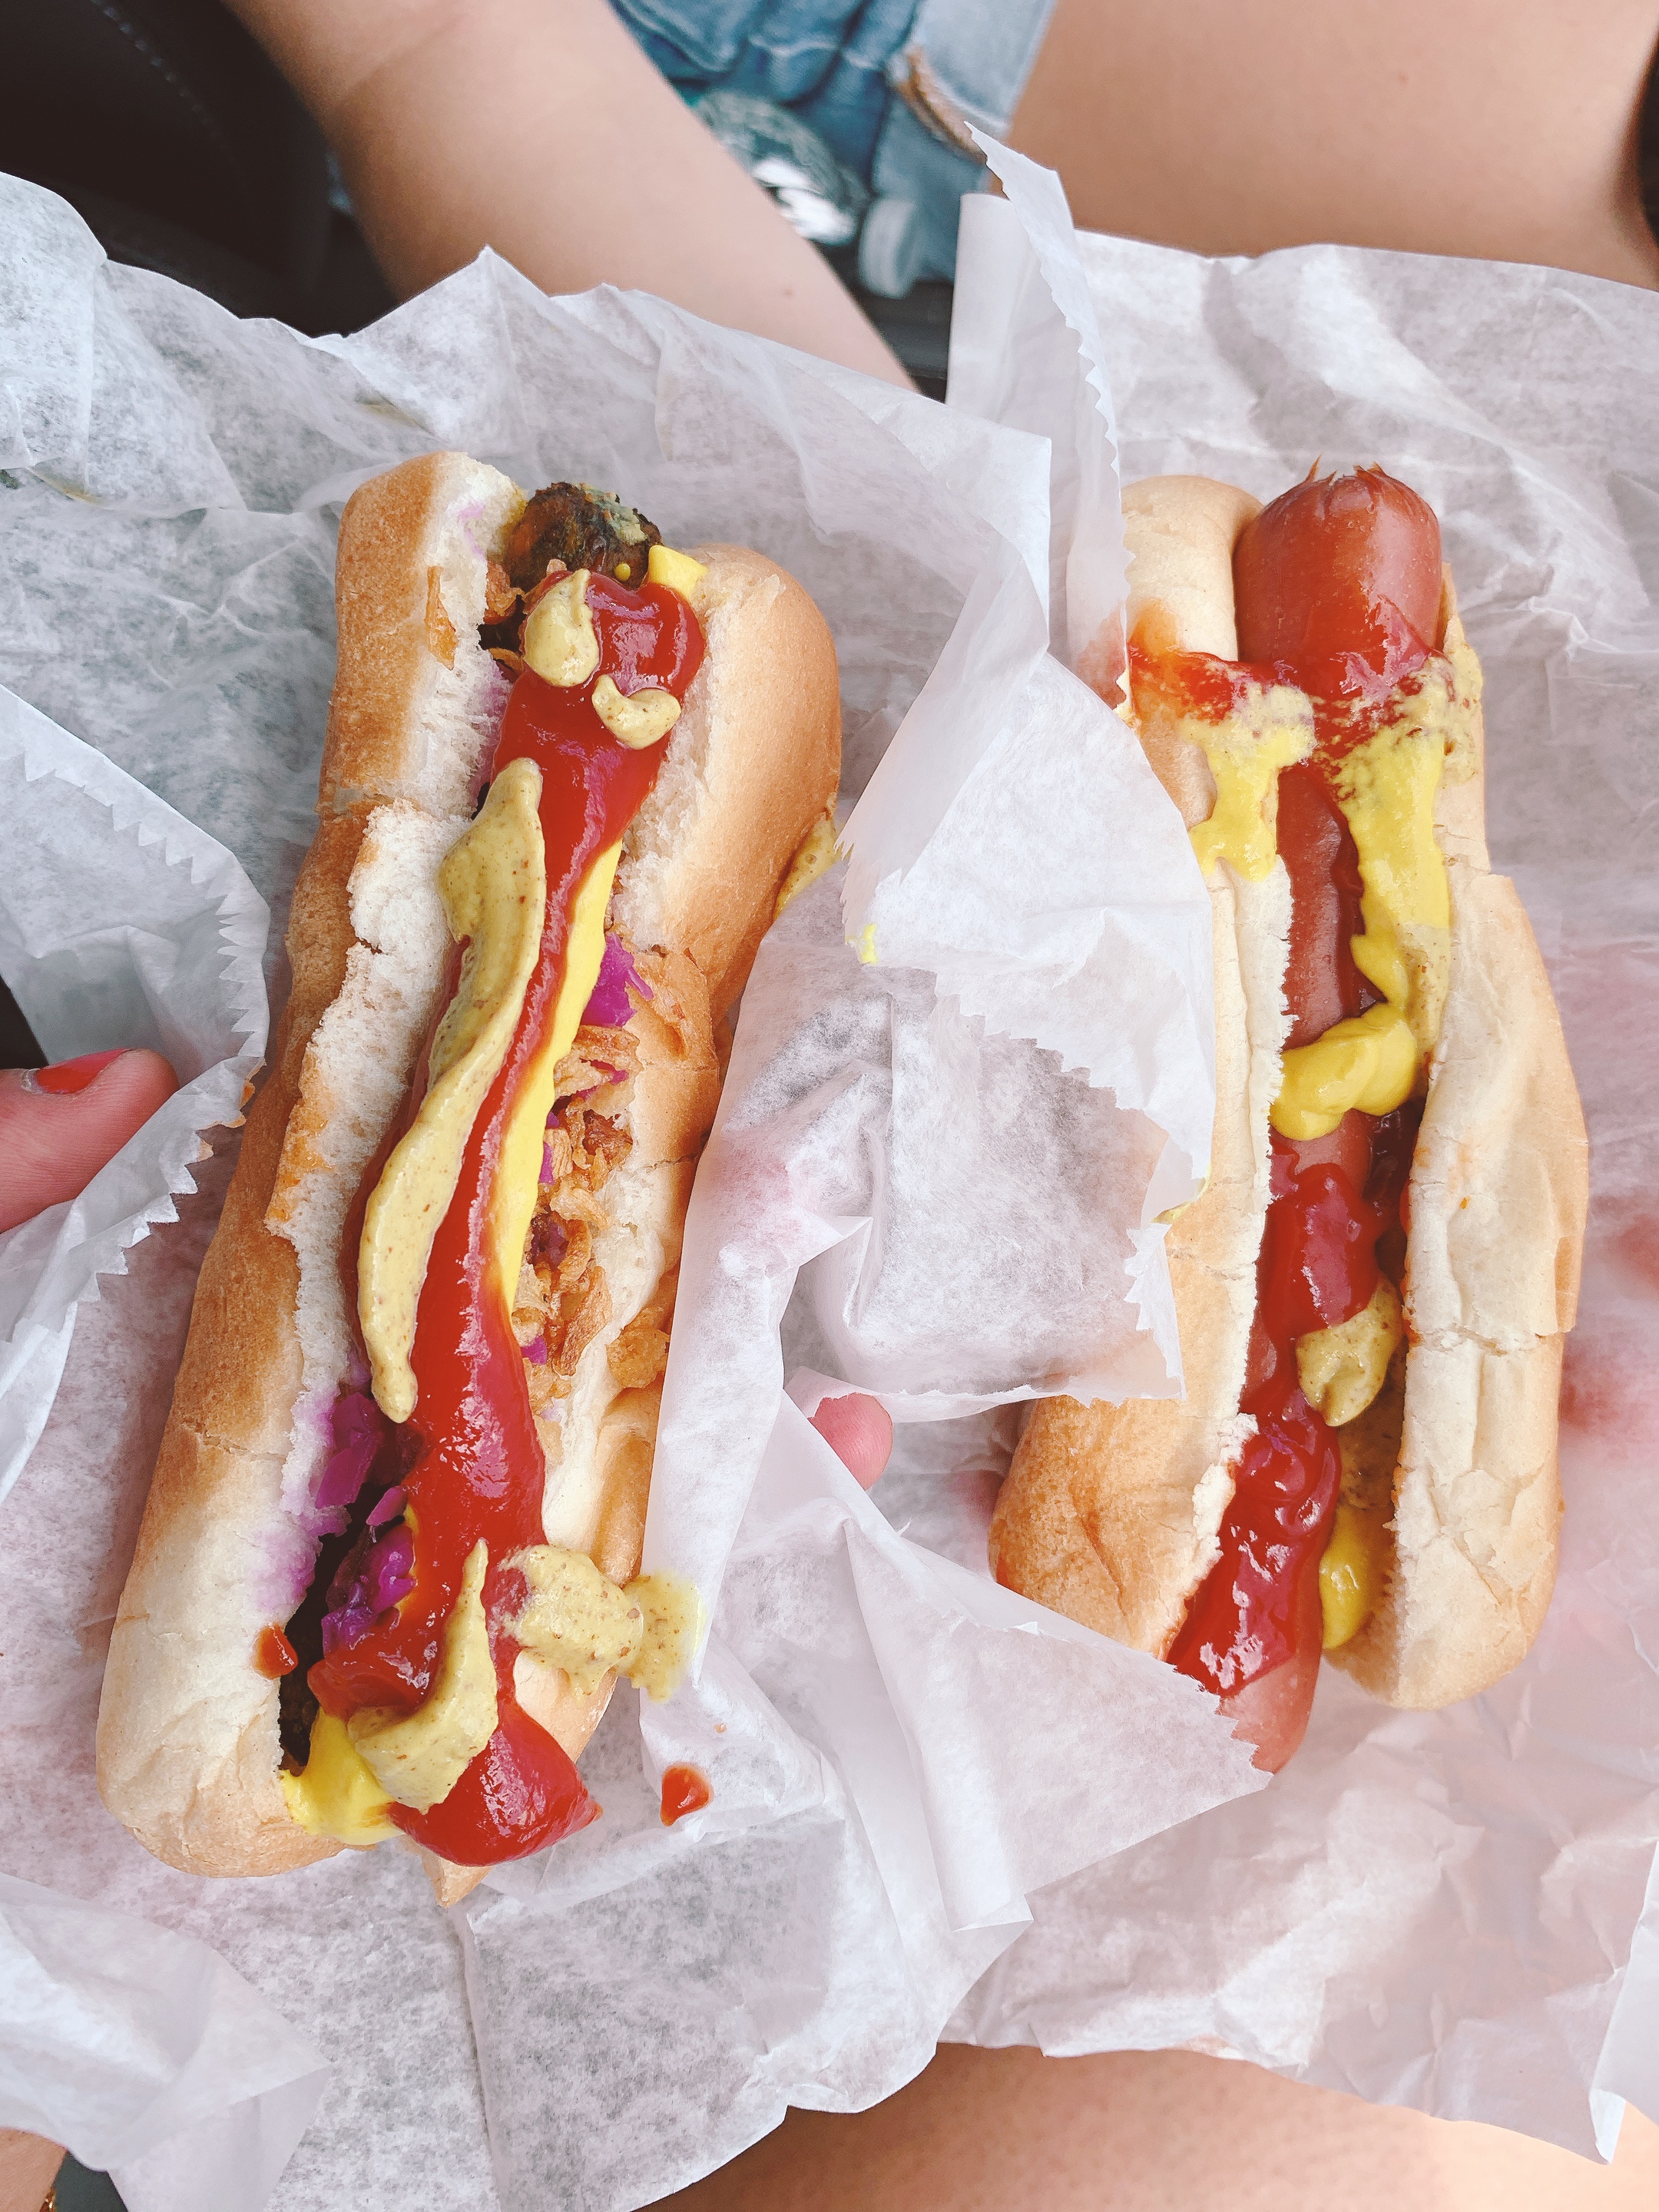 vegan hot dog and regular hot dog